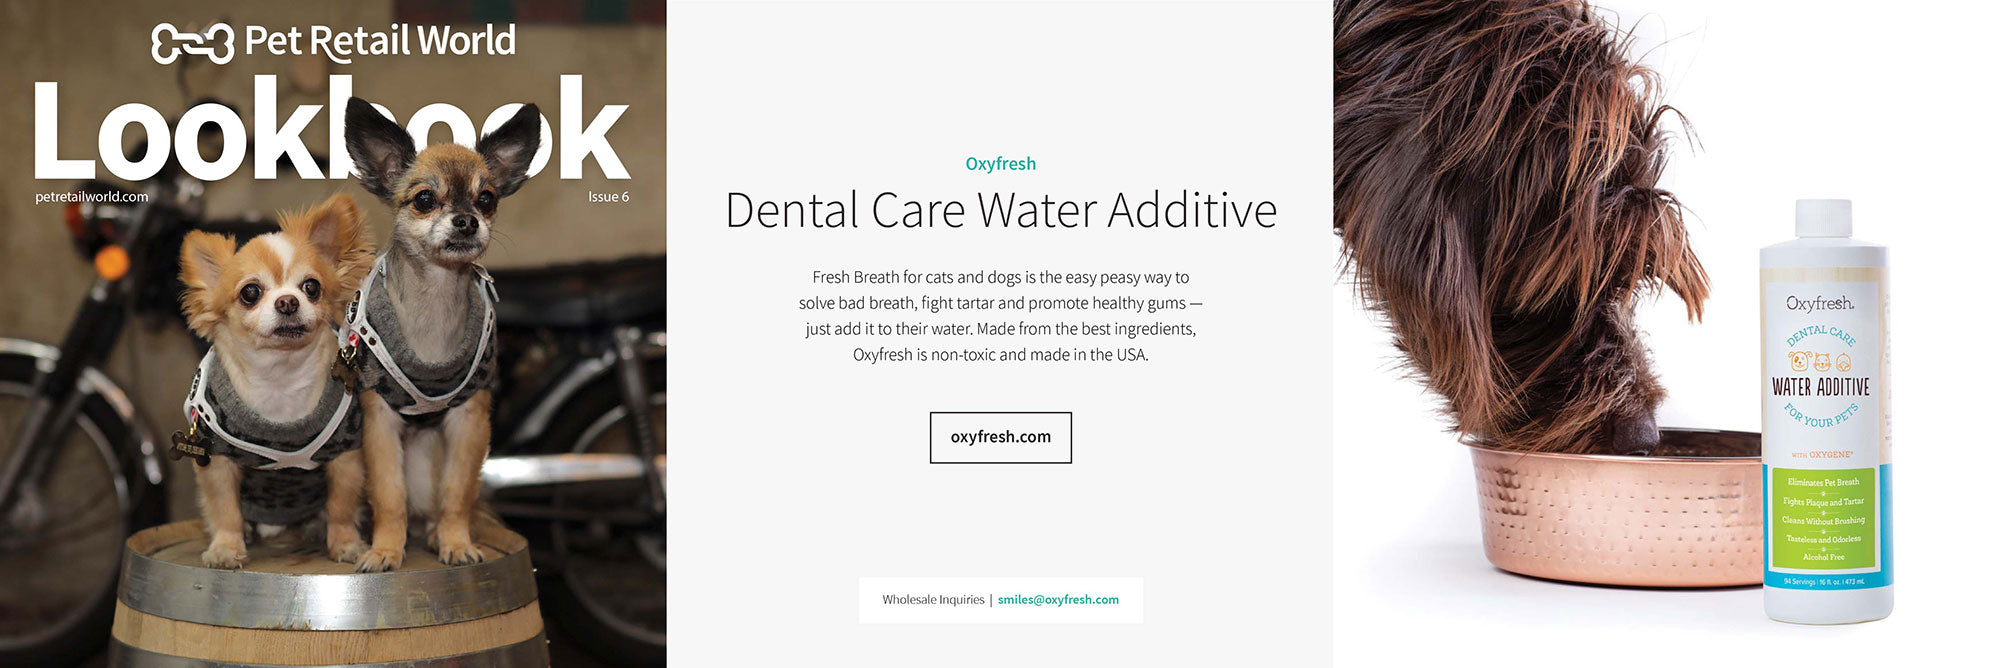 Oxyfresh_Pet_Retail_World_Featured_Water_Additive1